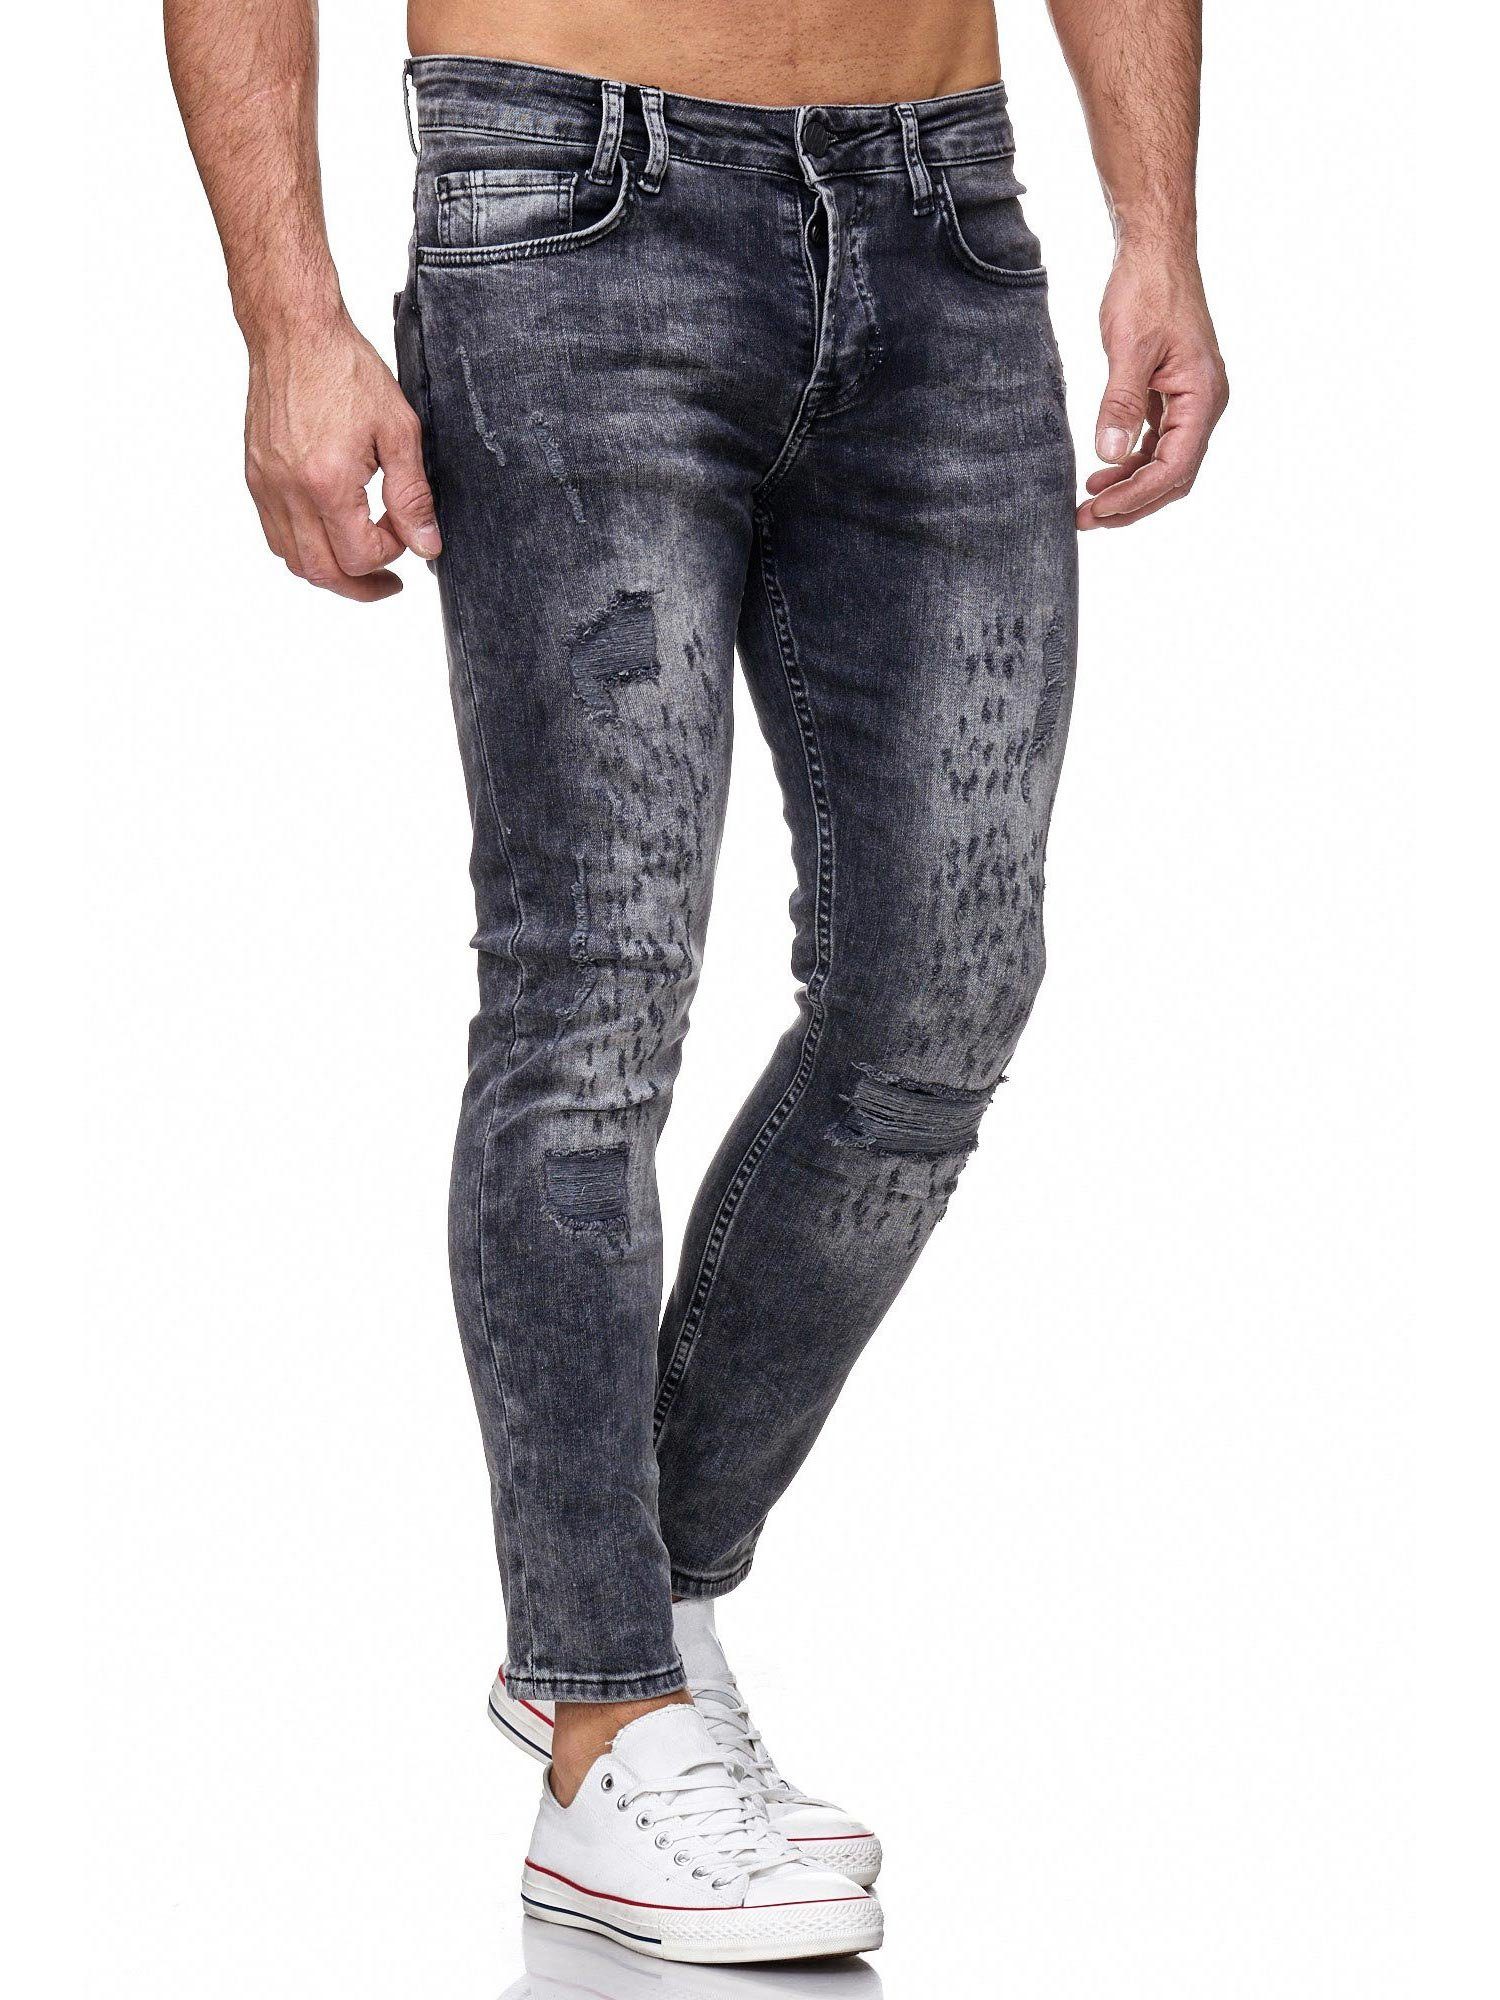 Tazzio Skinny-fit-Jeans 17516 im Destroyed-Look schwarz